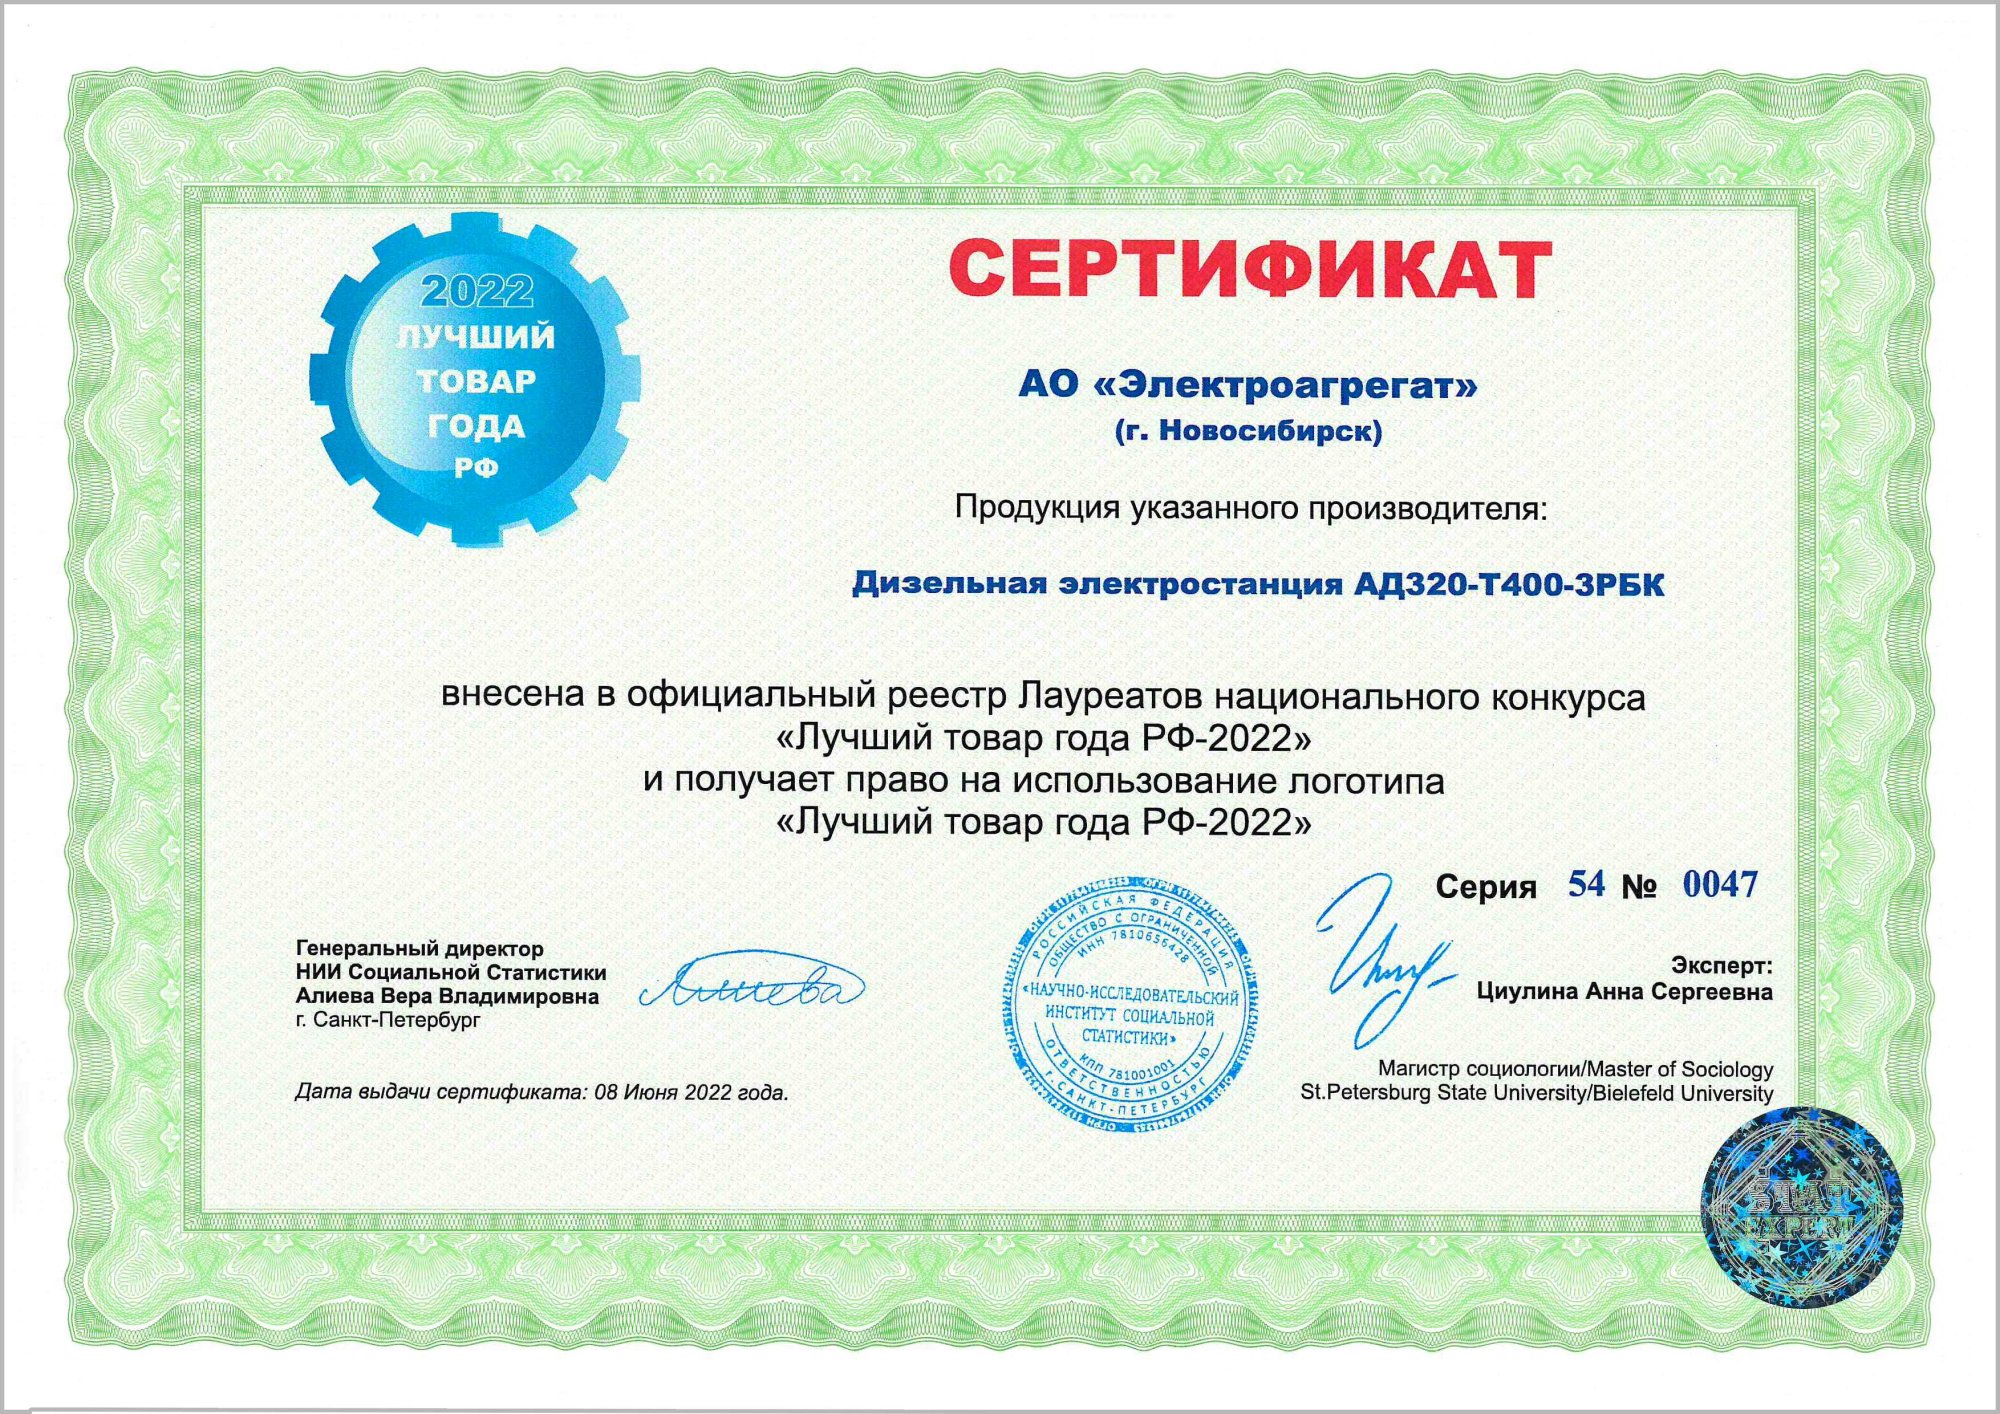 Сертификат АО Электроагрегат на ДГУ АД320-Т400-3РБК. Лучший товар года 2022